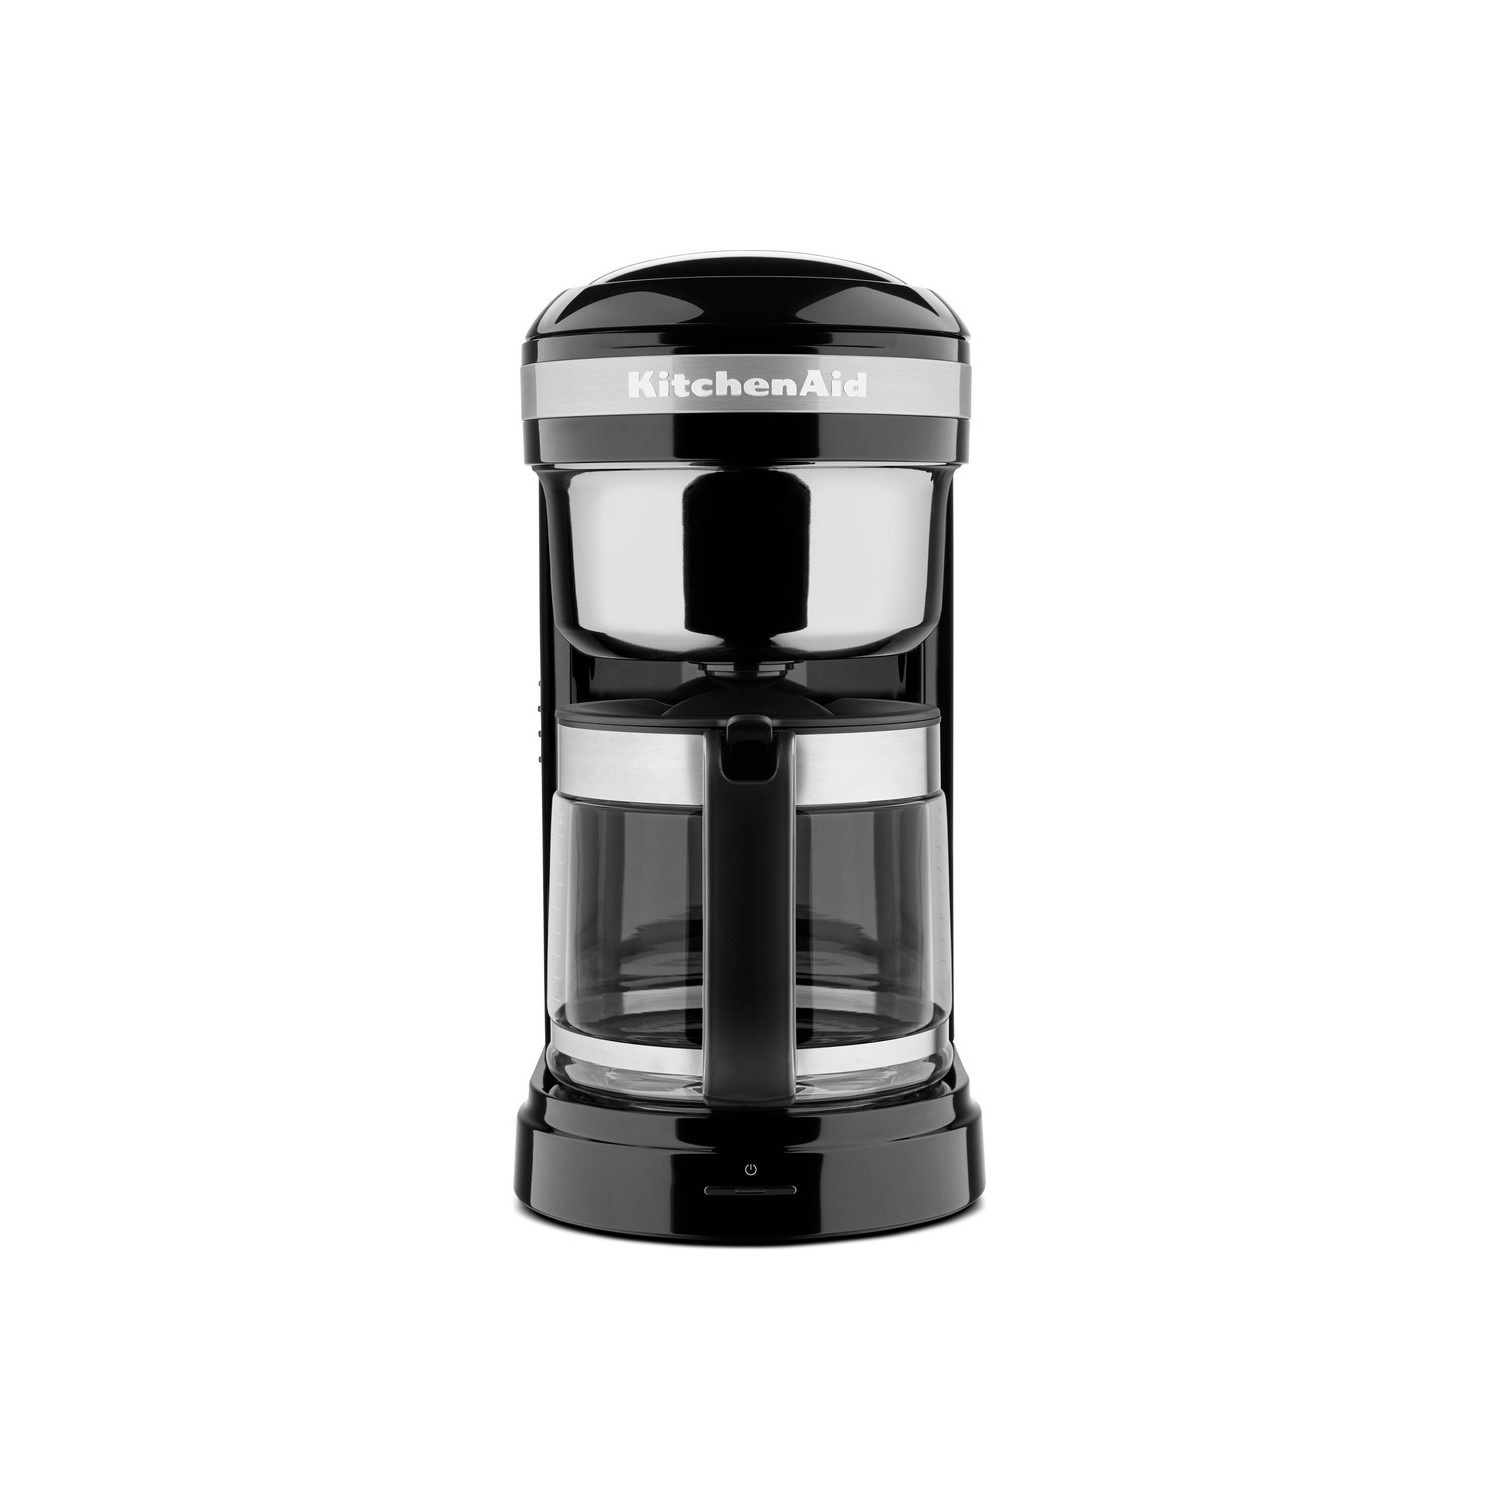 KitchenAid Drip Filter Coffee Machine - Black